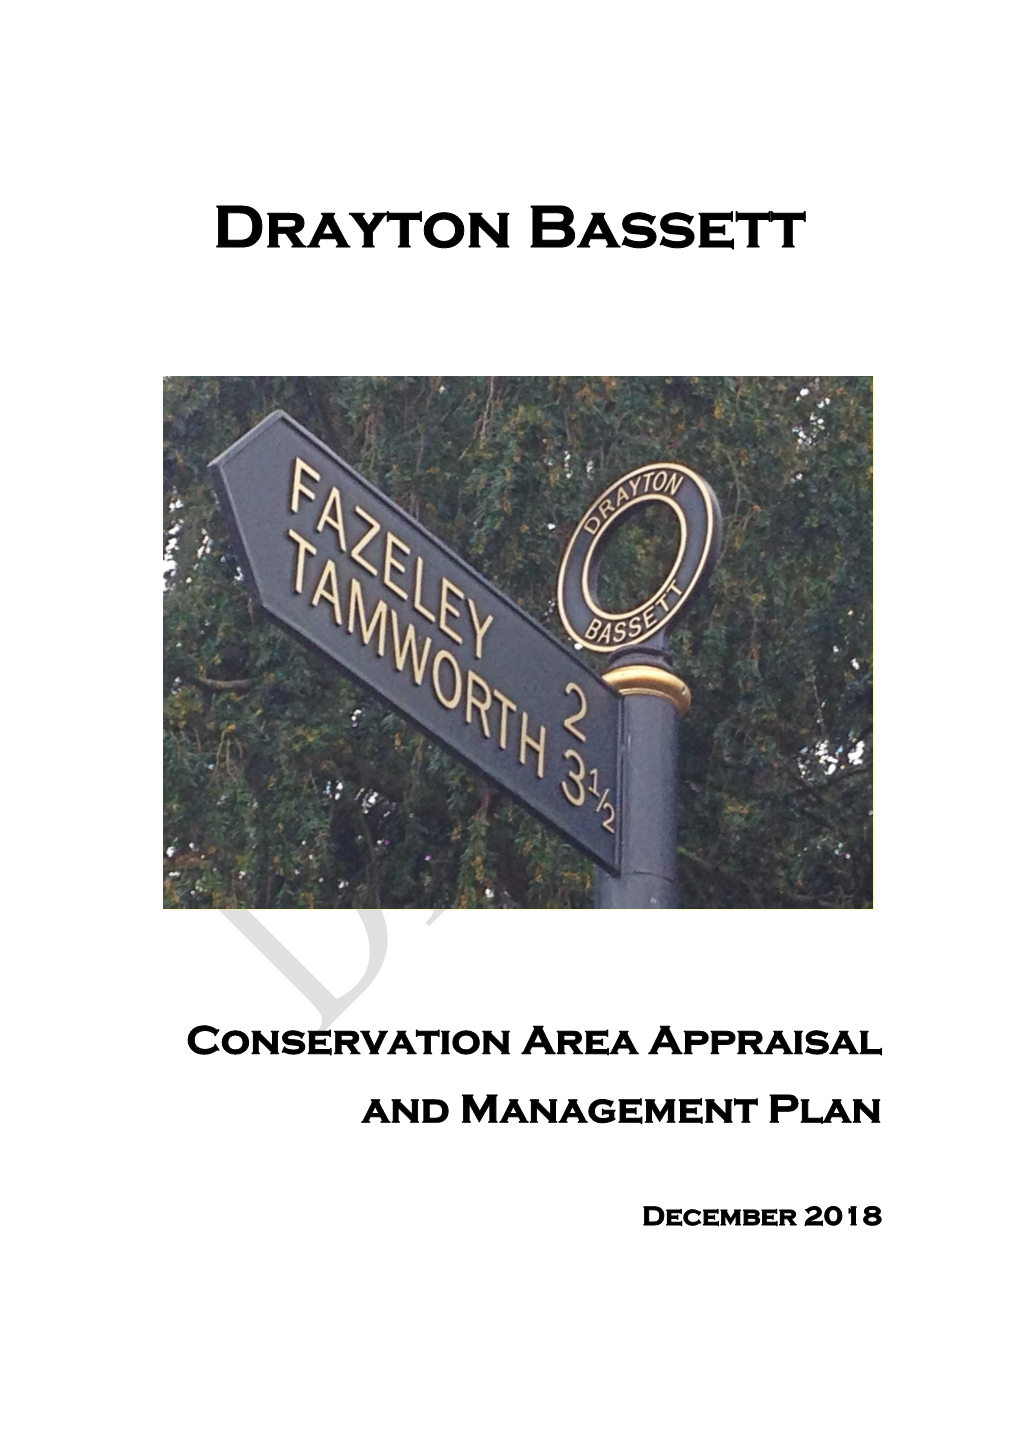 Drayton Bassett Conservation Area Appraisal and Management Plan